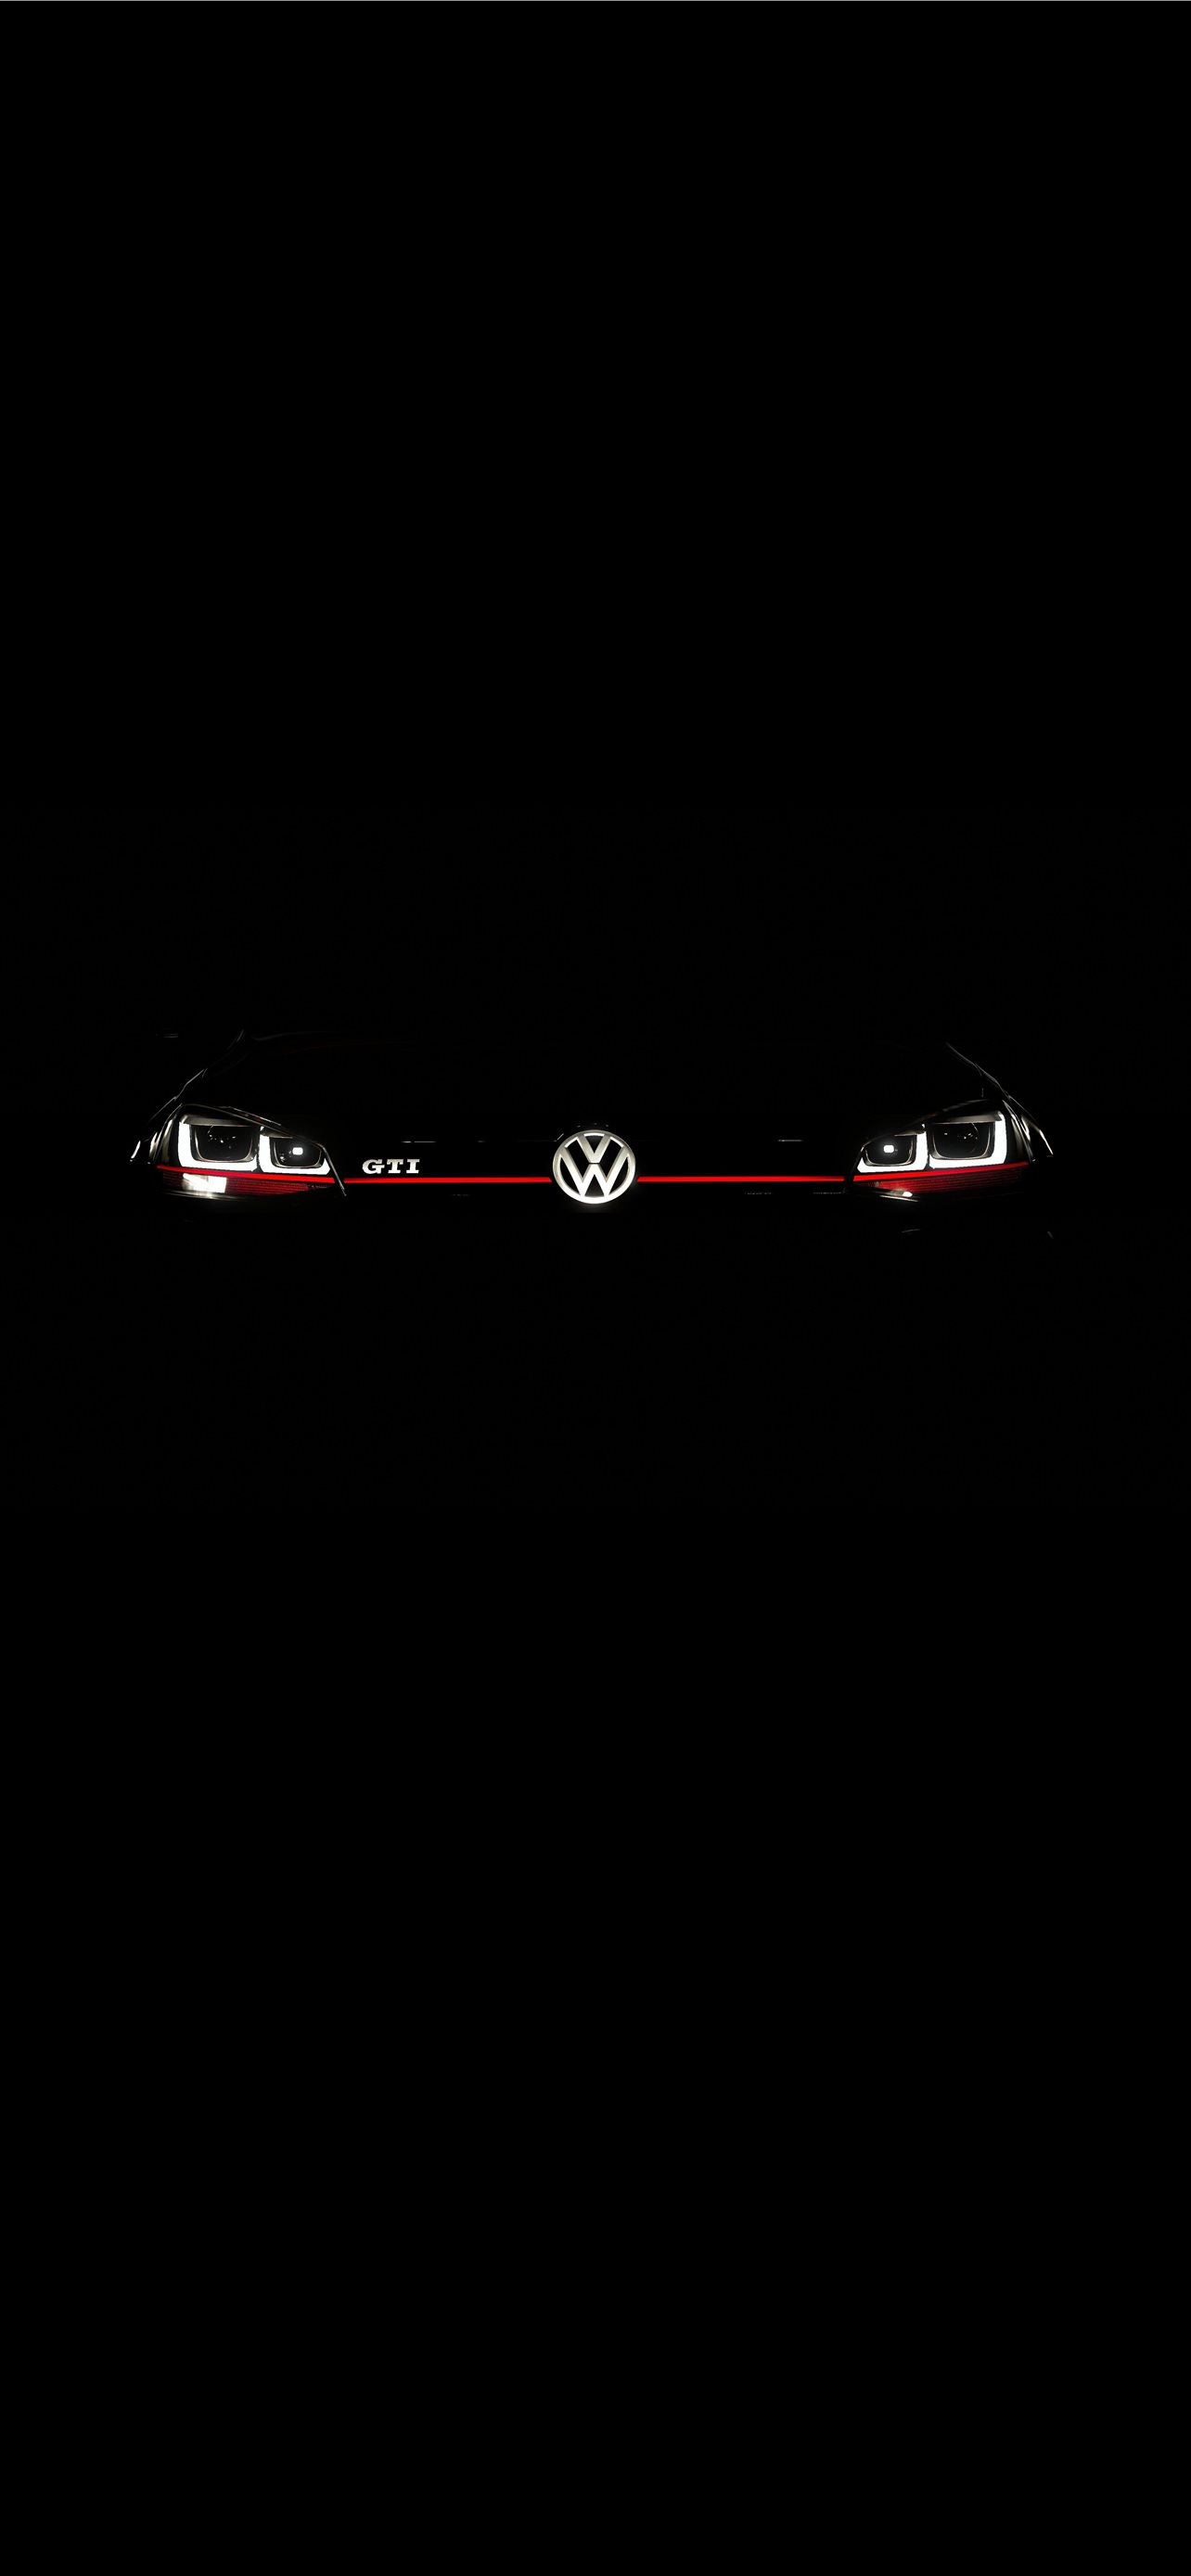 49 Volkswagen Logo Wallpaper on WallpaperSafari  Volkswagen logo  Volkswagen Iphone wallpaper for desktop